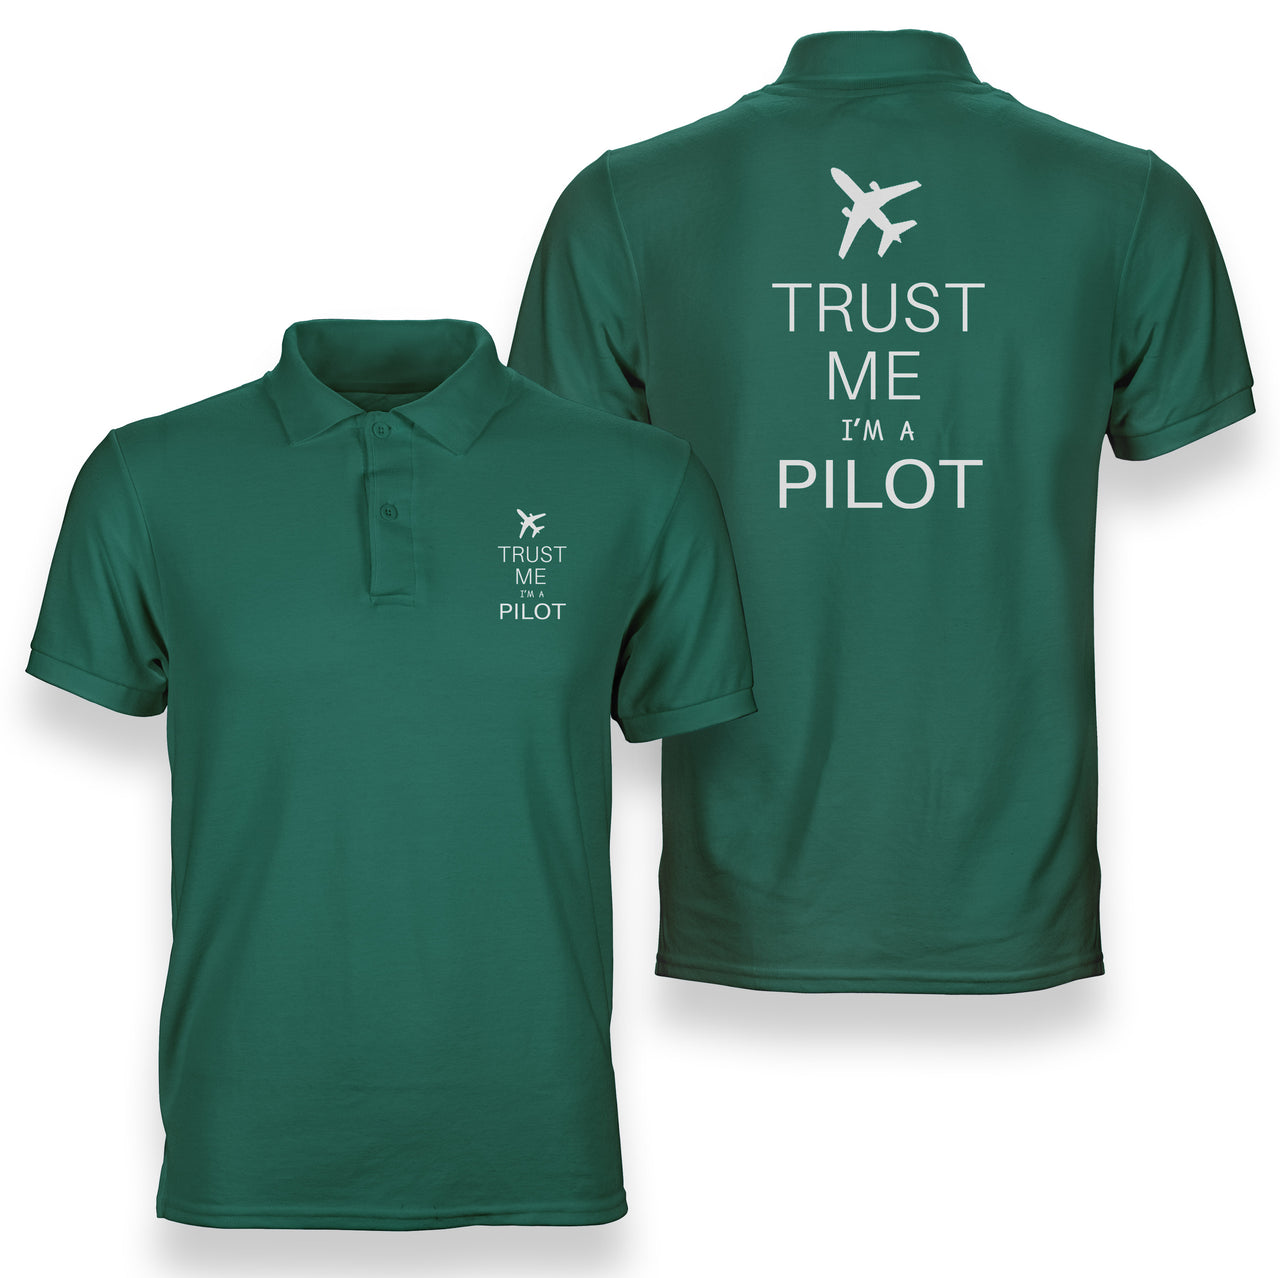 Trust Me I'm a Pilot 2 Designed Double Side Polo T-Shirts